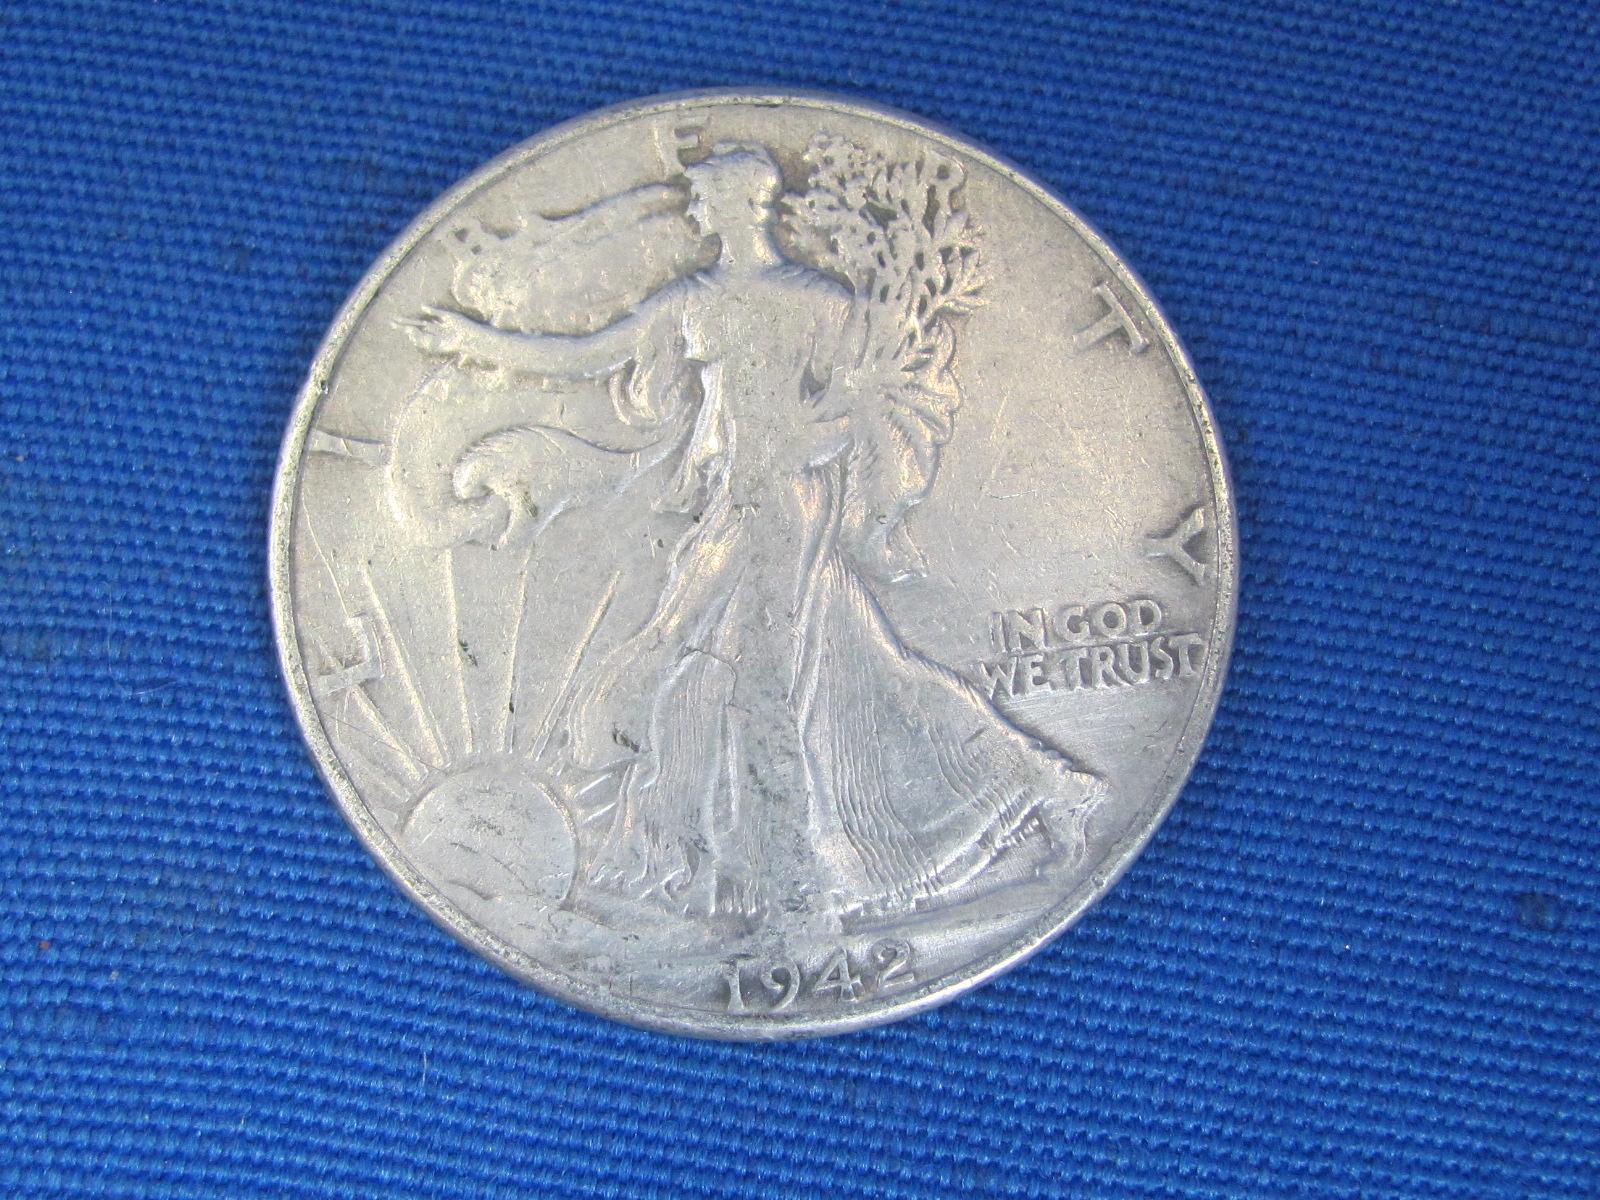 3 Walking Liberty Half Dollars – 1942, 1937, 1939-D